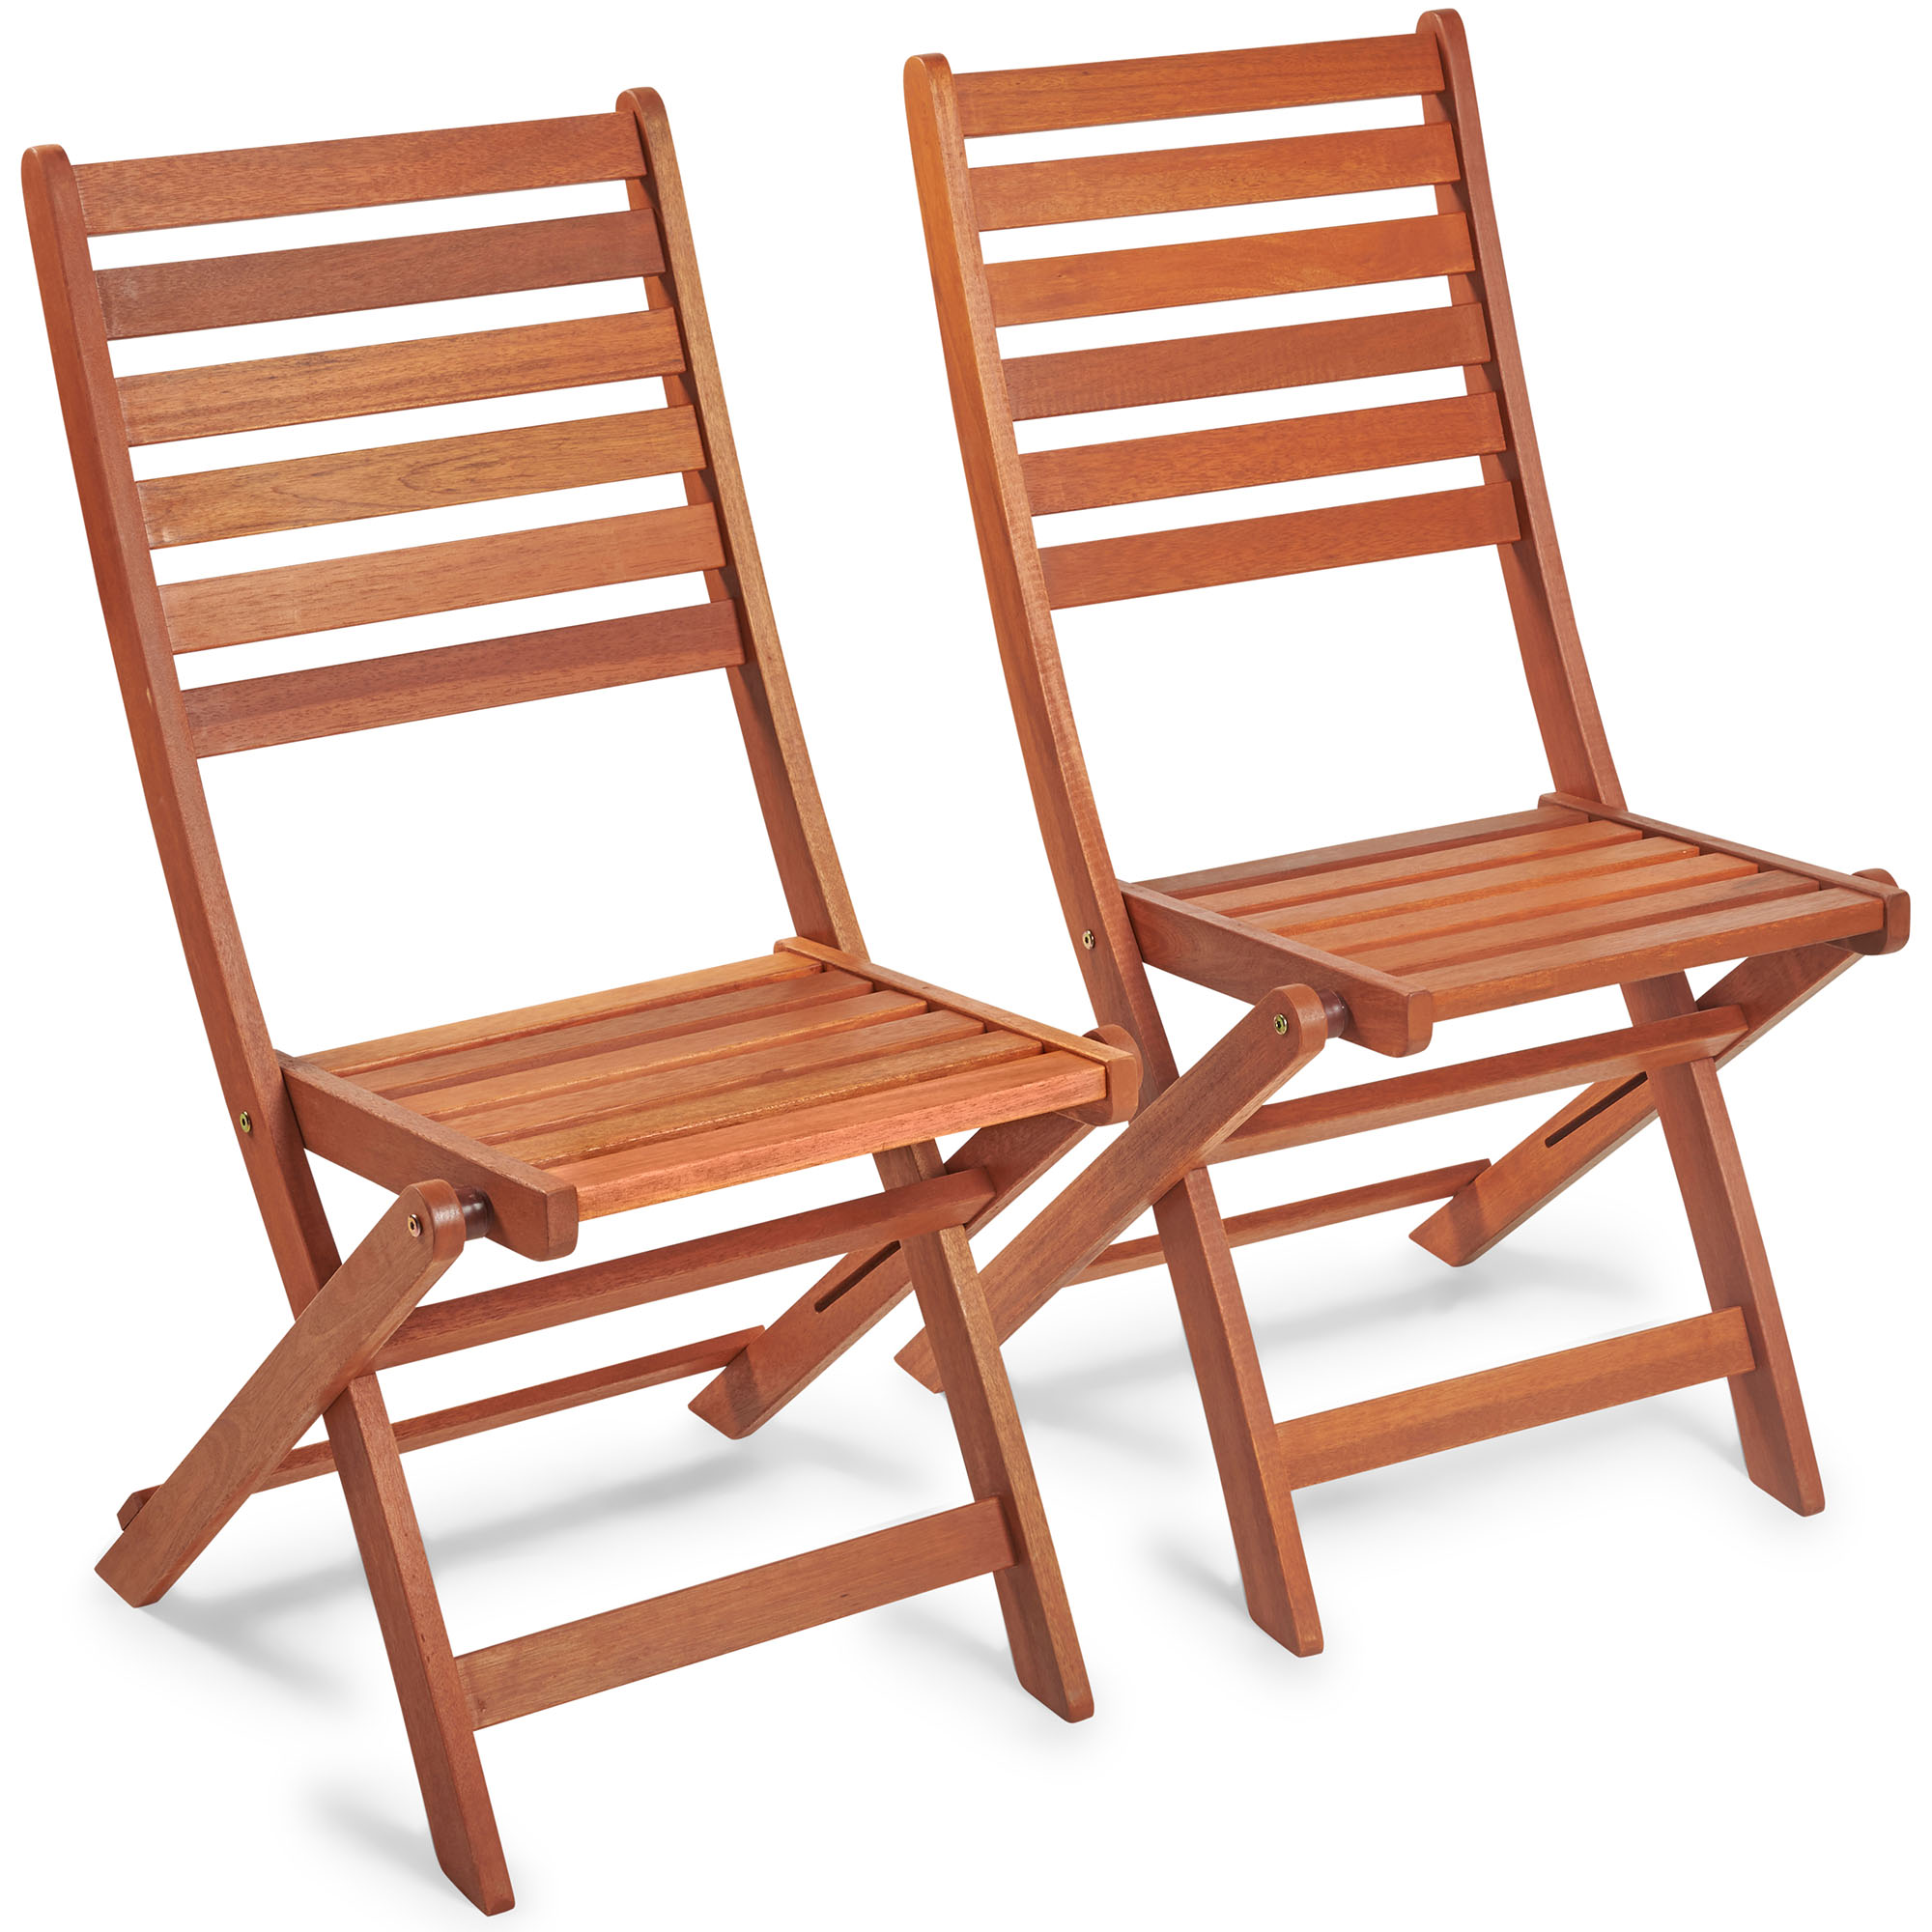 VonHaus Set of 2 Wooden Folding Teak Wood Chairs for Garden - Light